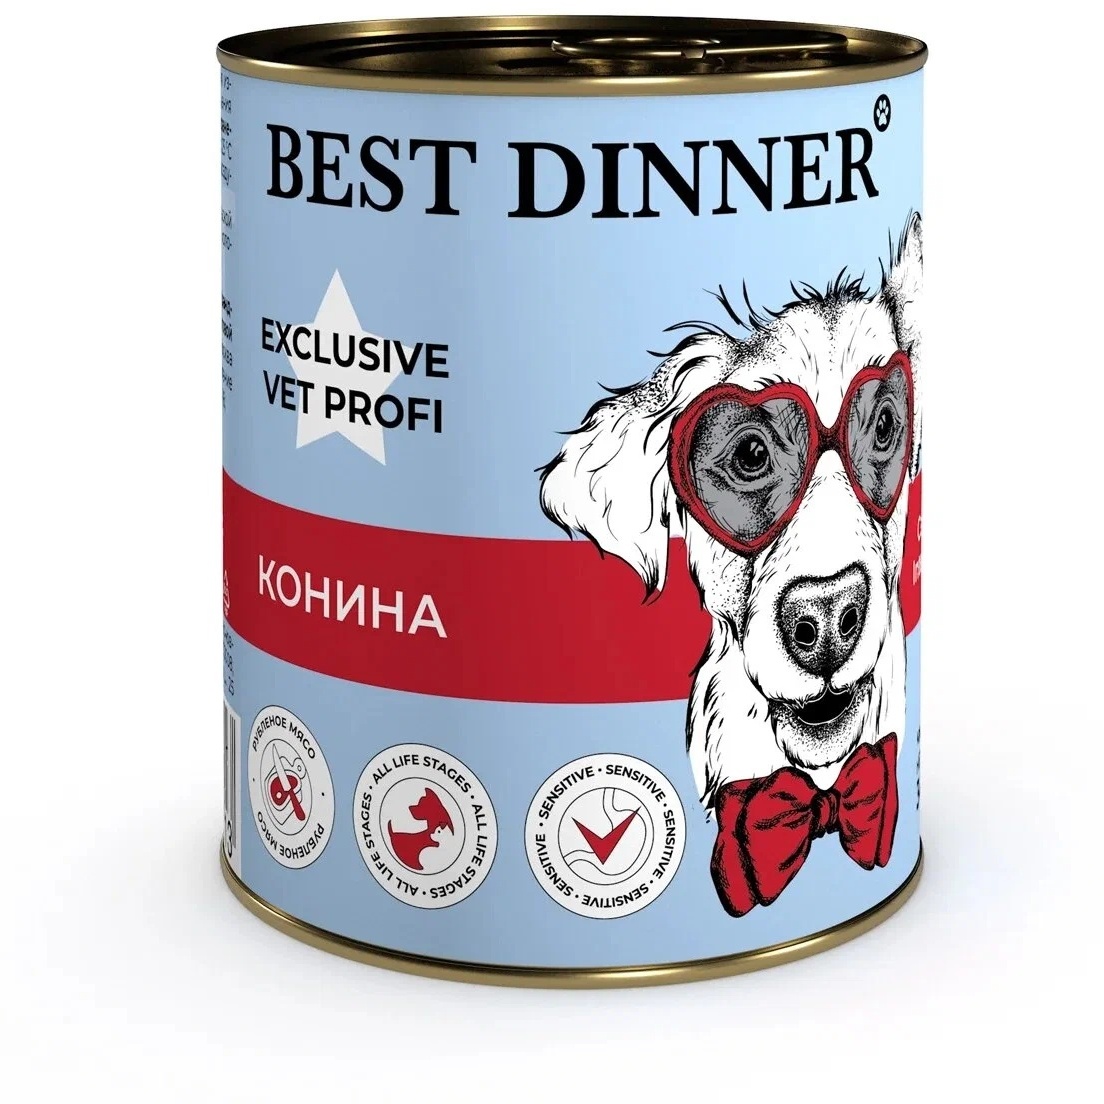 Best Dinner Exclusive Vet Profi Gastro Intestinal Конина конс для собак 340 г